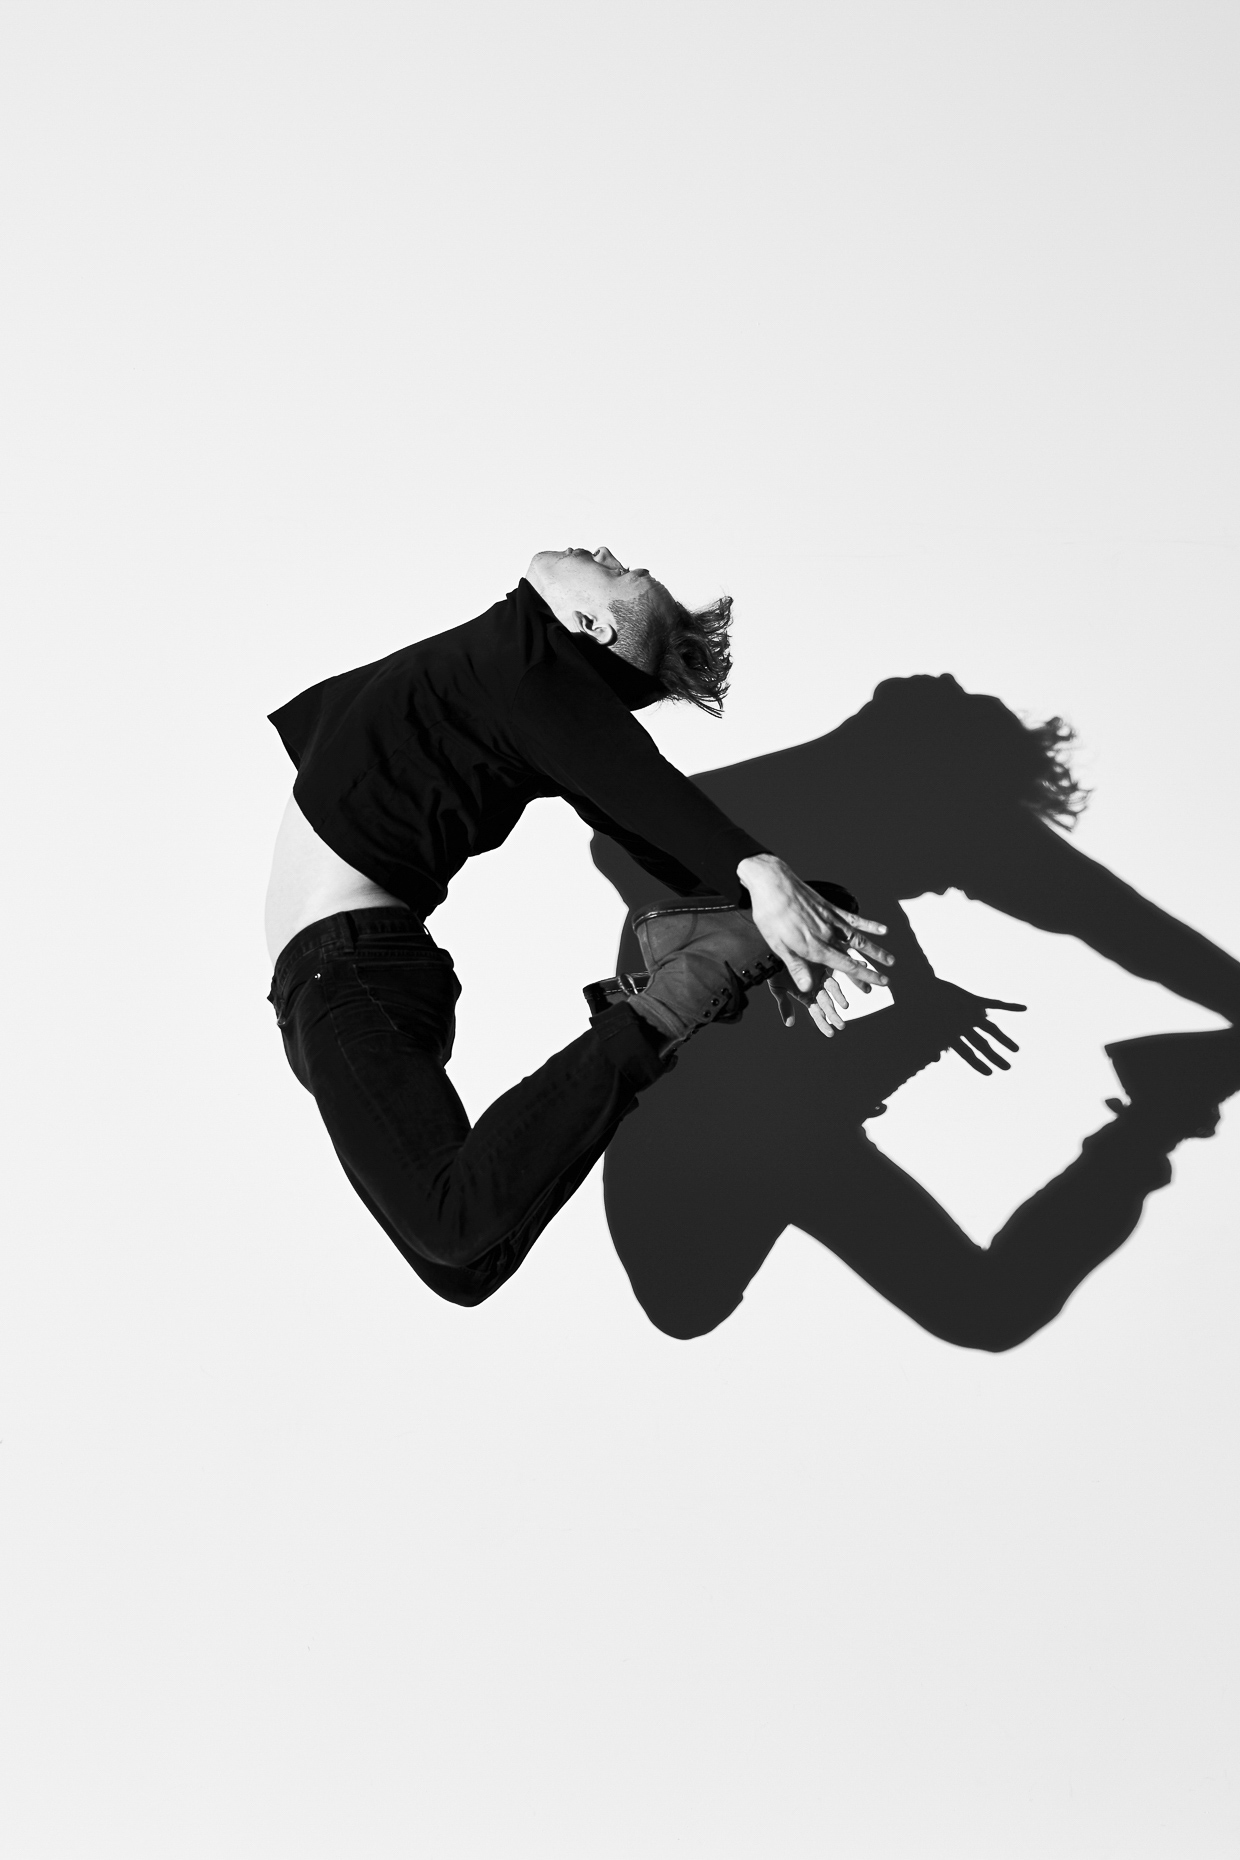 B&W of Urban dancer Daniel Giron jumps and dances by Andy Batt